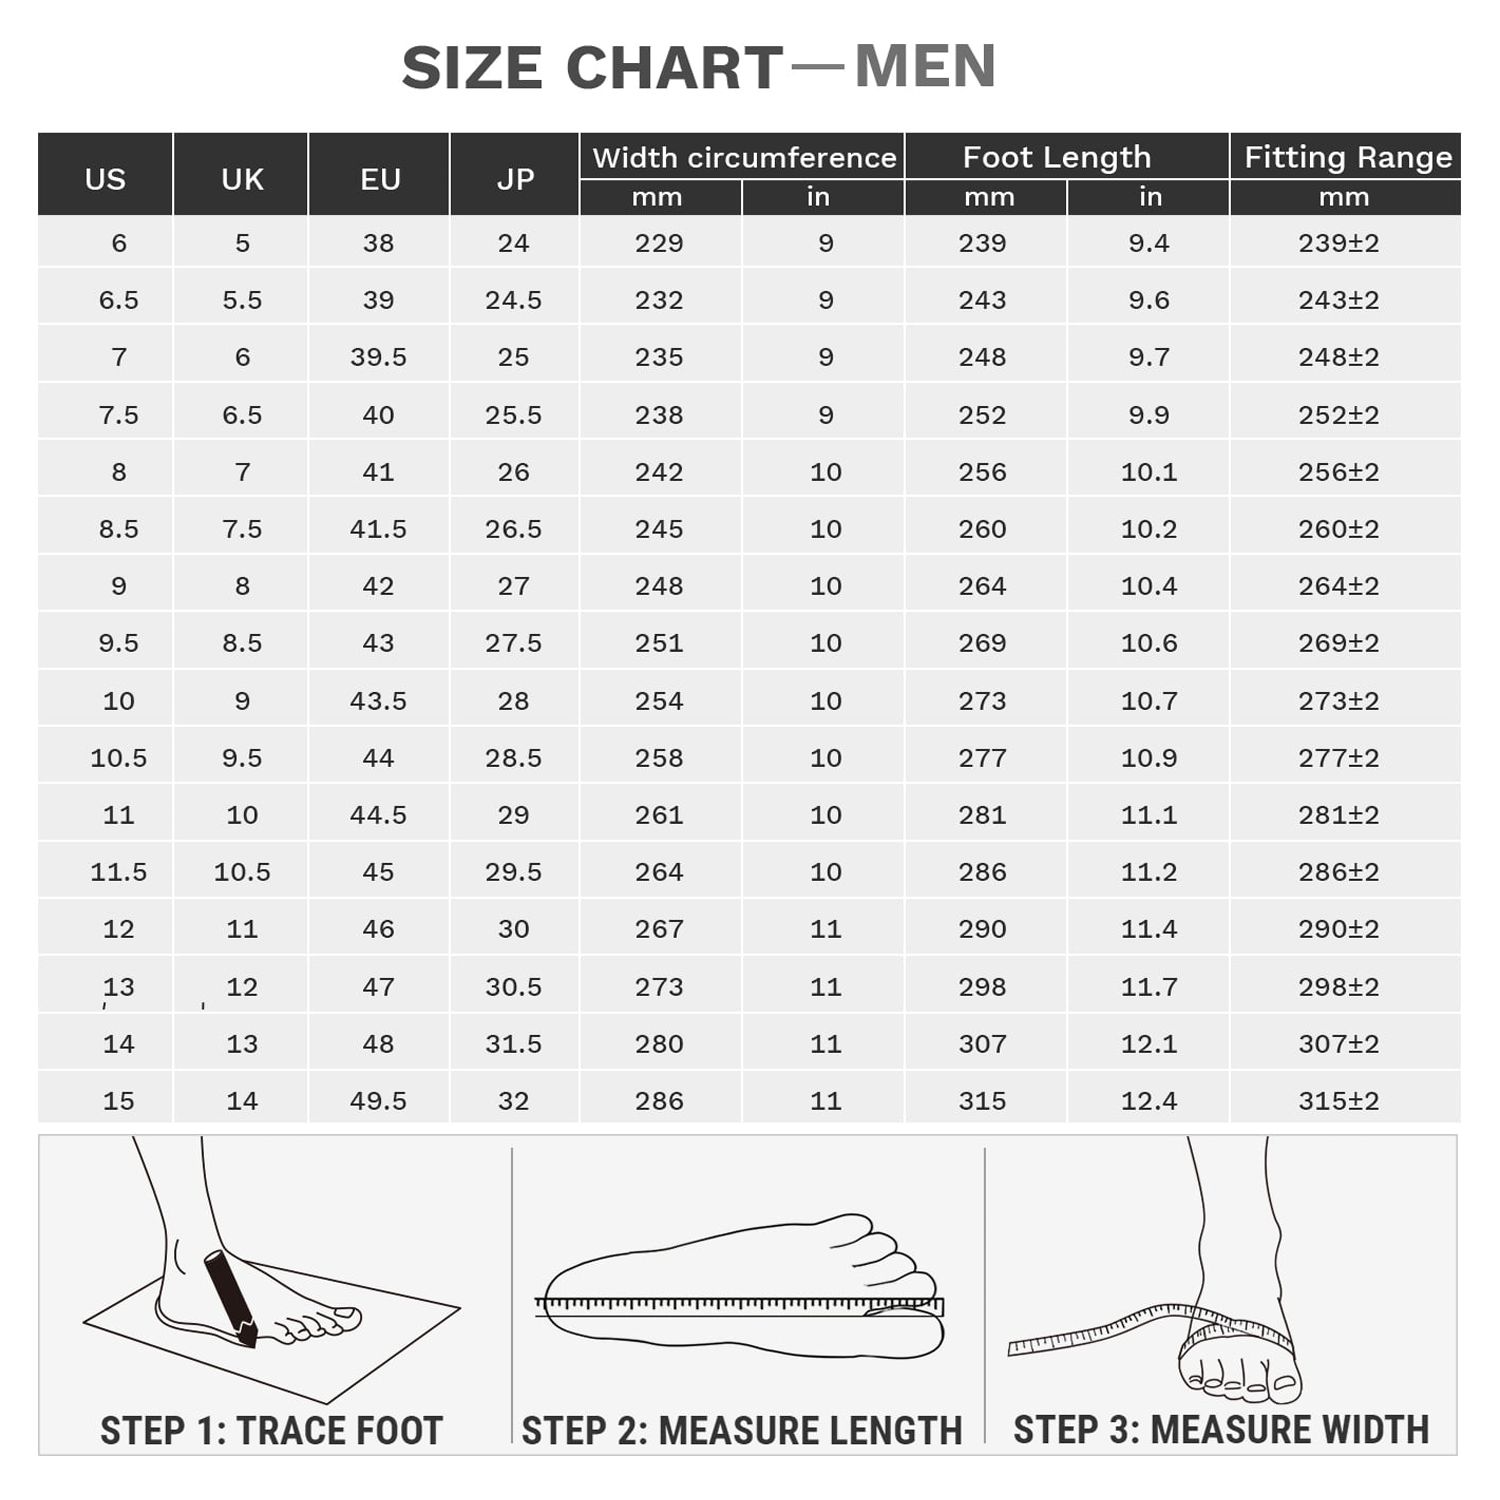 Nortiv8 Men's Memory Foam Adjustable Slide Sandals Comfort Lightweight Summer Beach Sandals Shoes FUSION GREY Size 15 - image 5 of 5